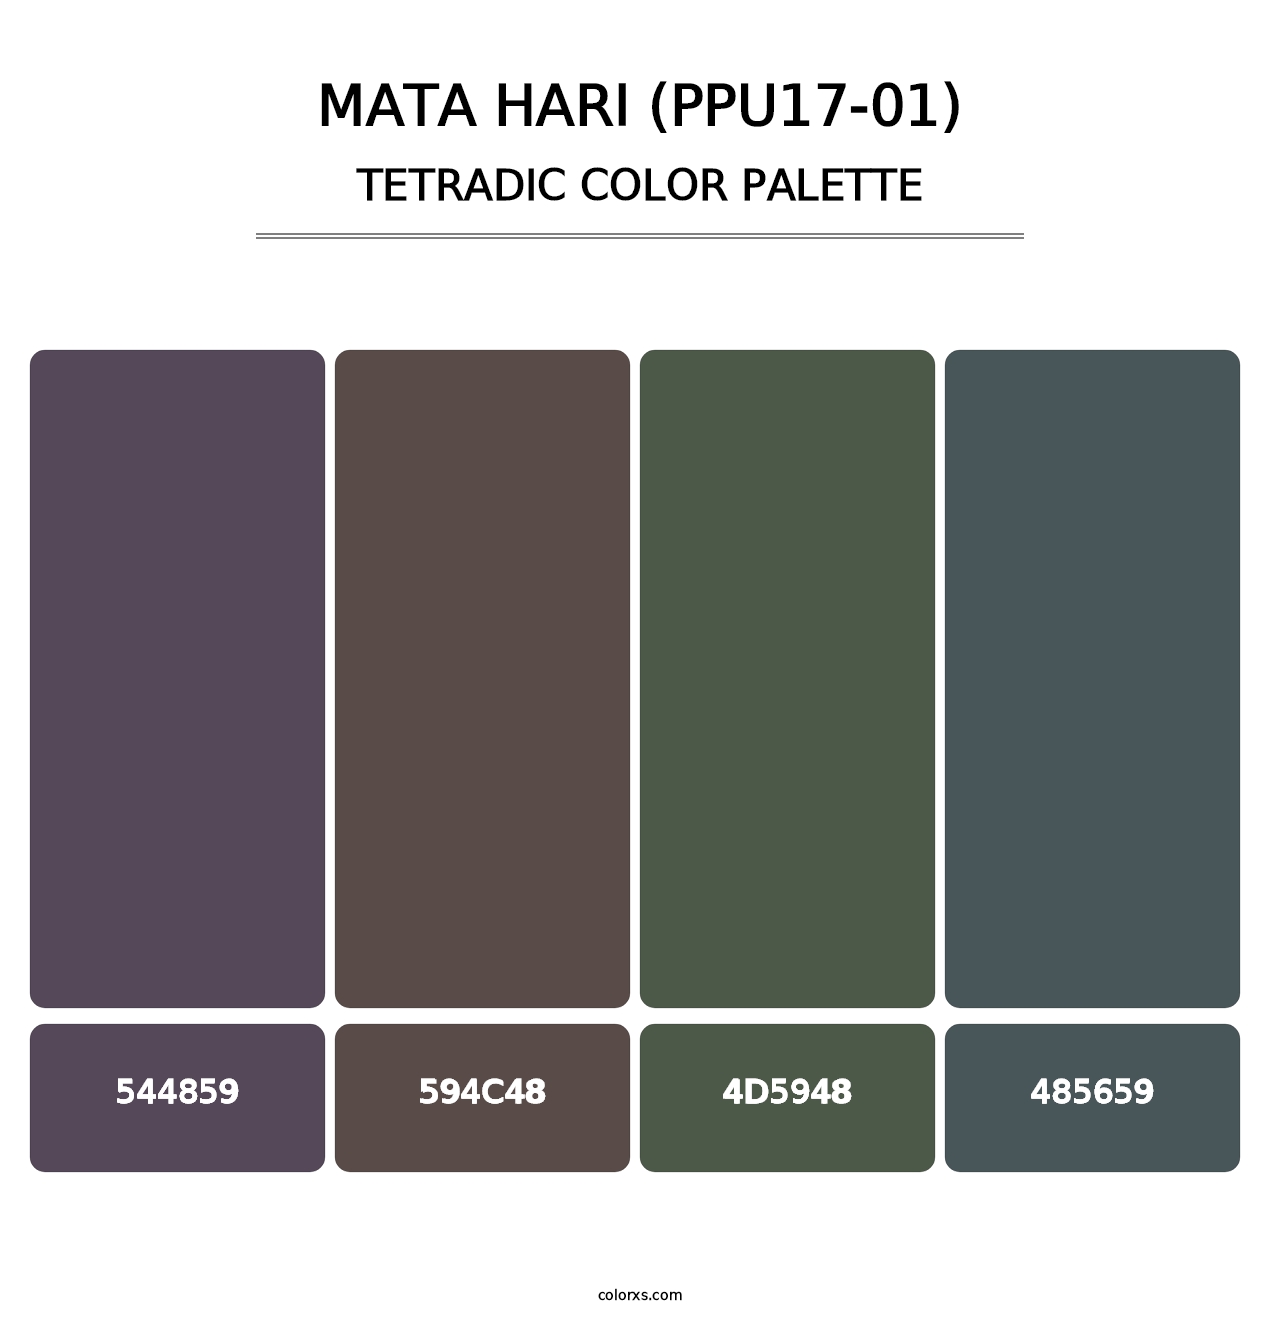 Mata Hari (PPU17-01) - Tetradic Color Palette